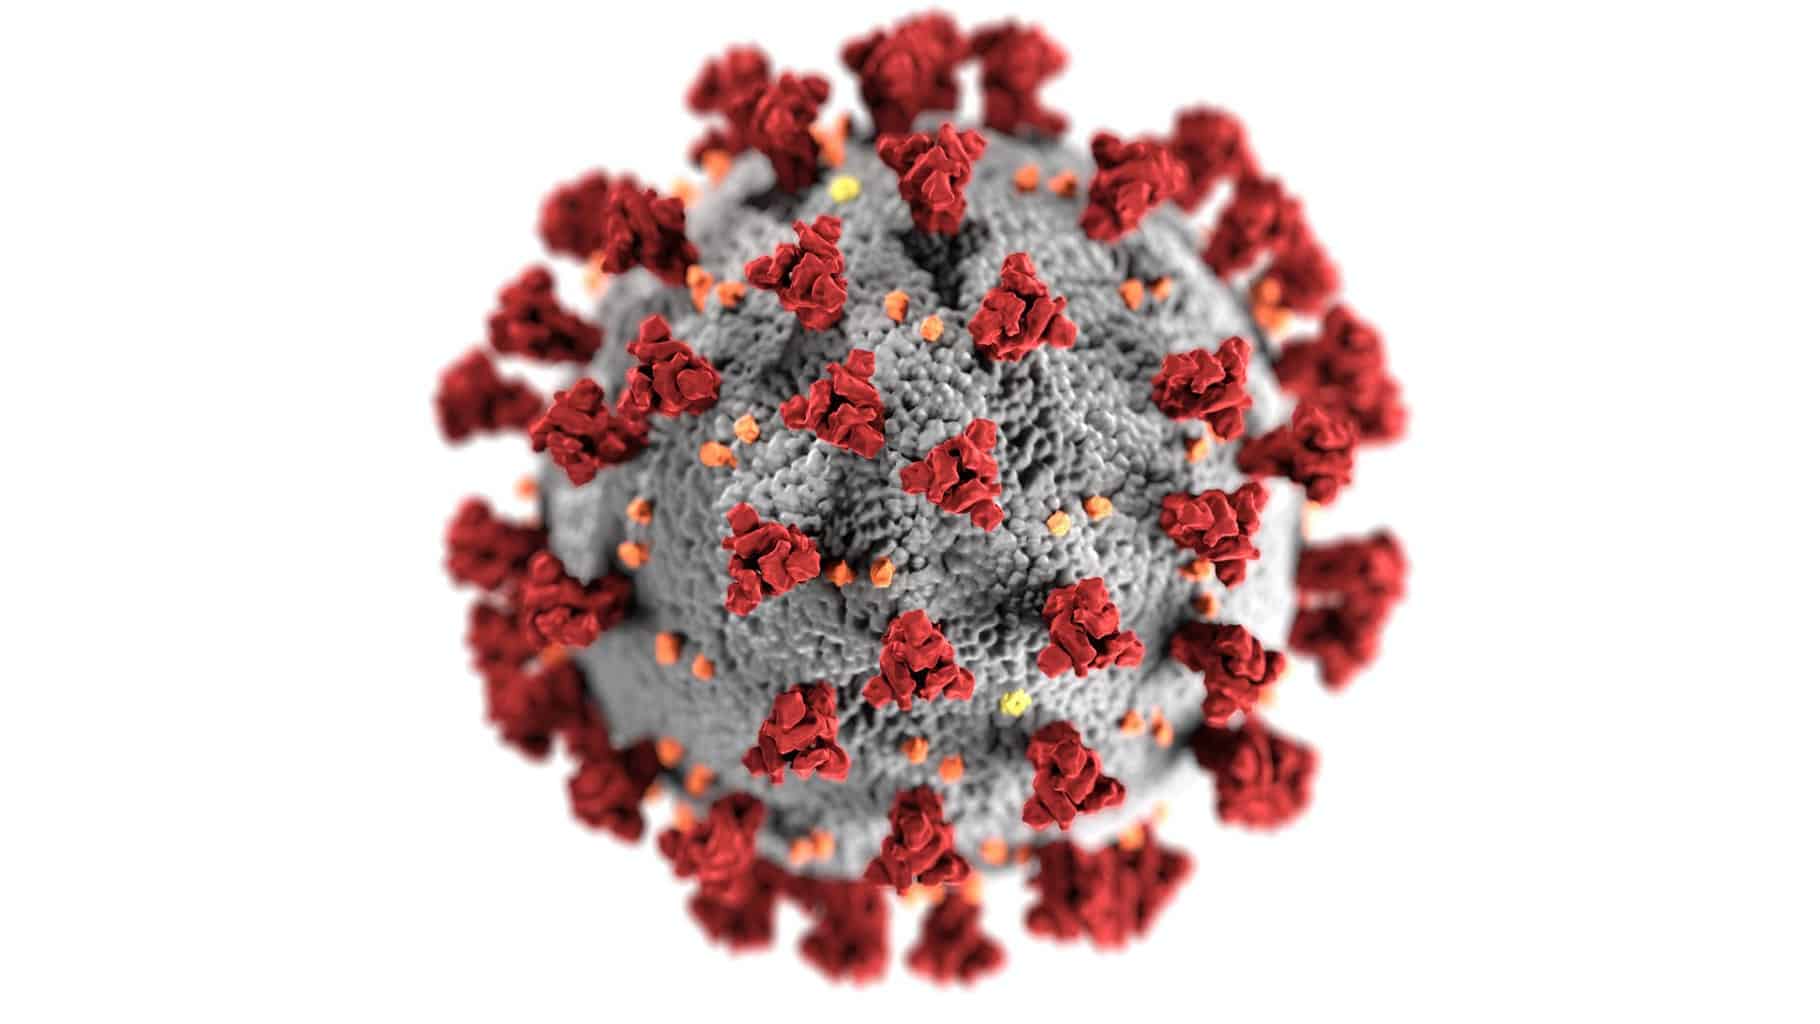 Worries around this flu season amidst the pandemic by Hani Zeini